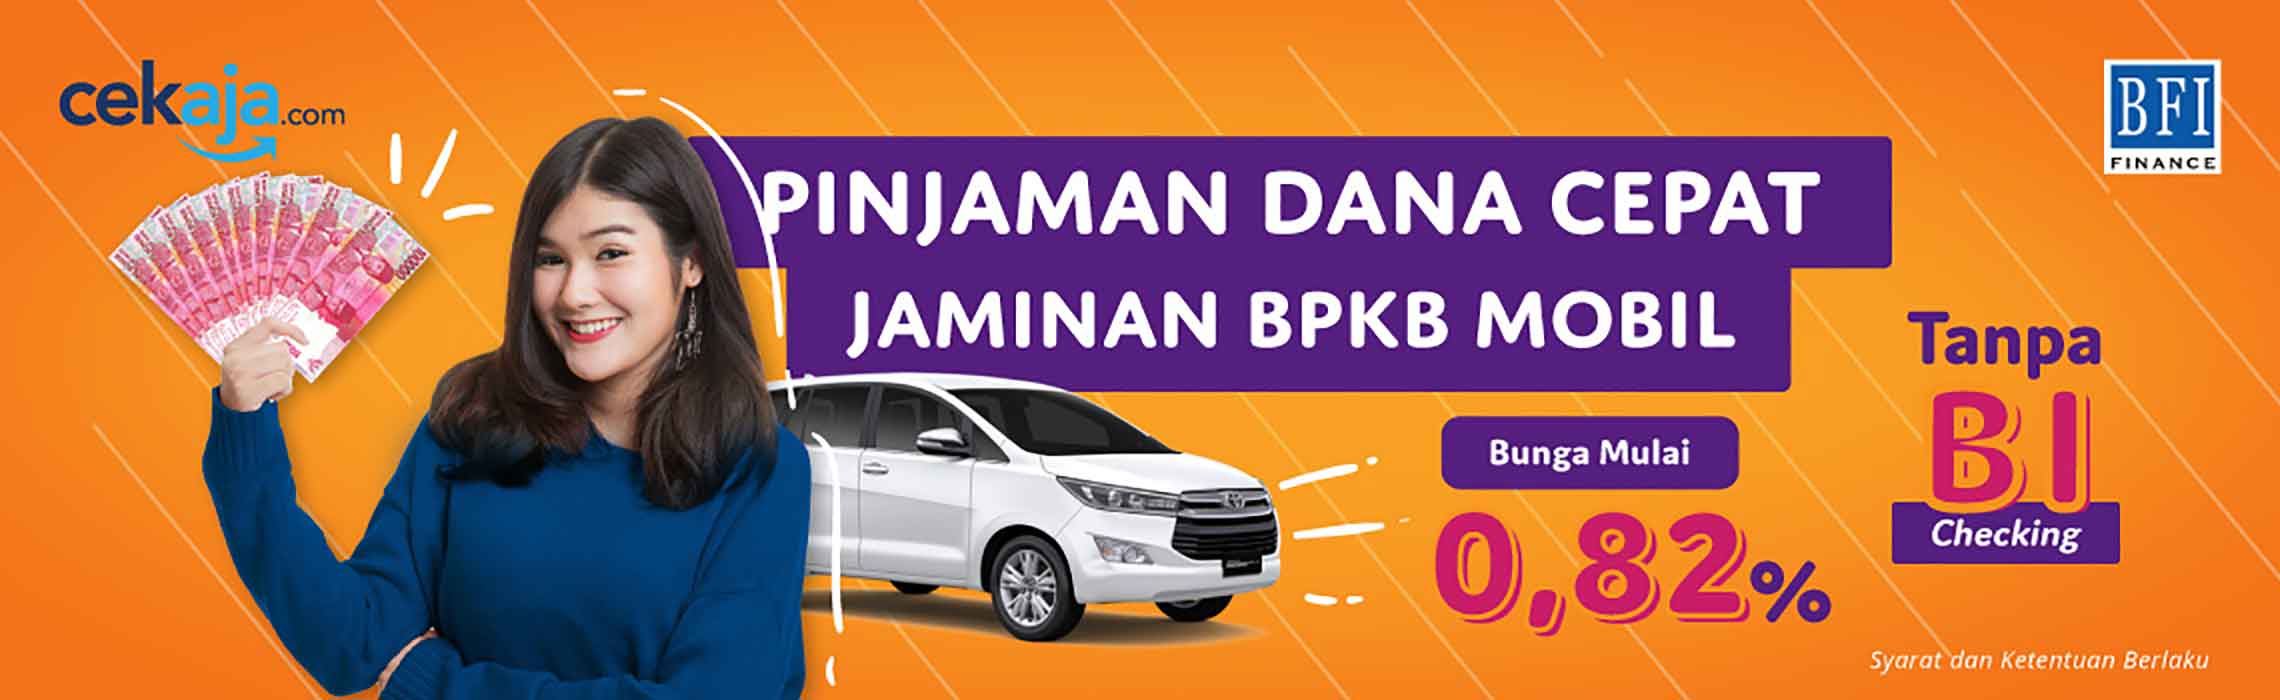 BFI Finance Pinjaman Dana Tunai Jaminan BPKB Mobil CekAja